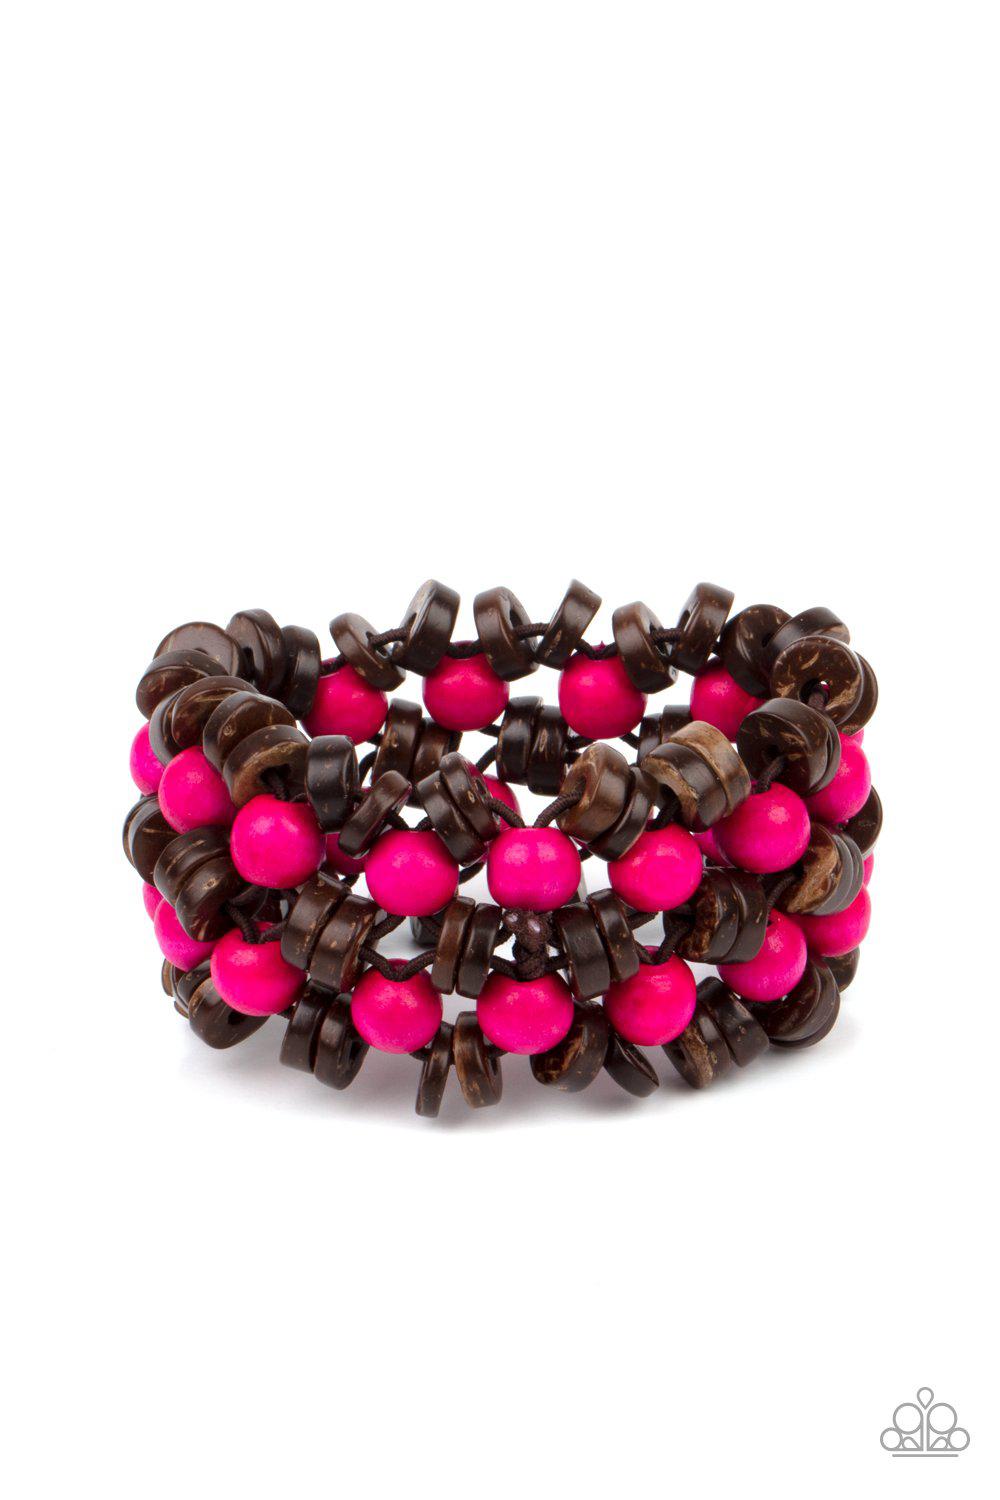 Tahiti Tourist Pink and Brown Wood Bracelet - Paparazzi Accessories- lightbox - CarasShop.com - $5 Jewelry by Cara Jewels